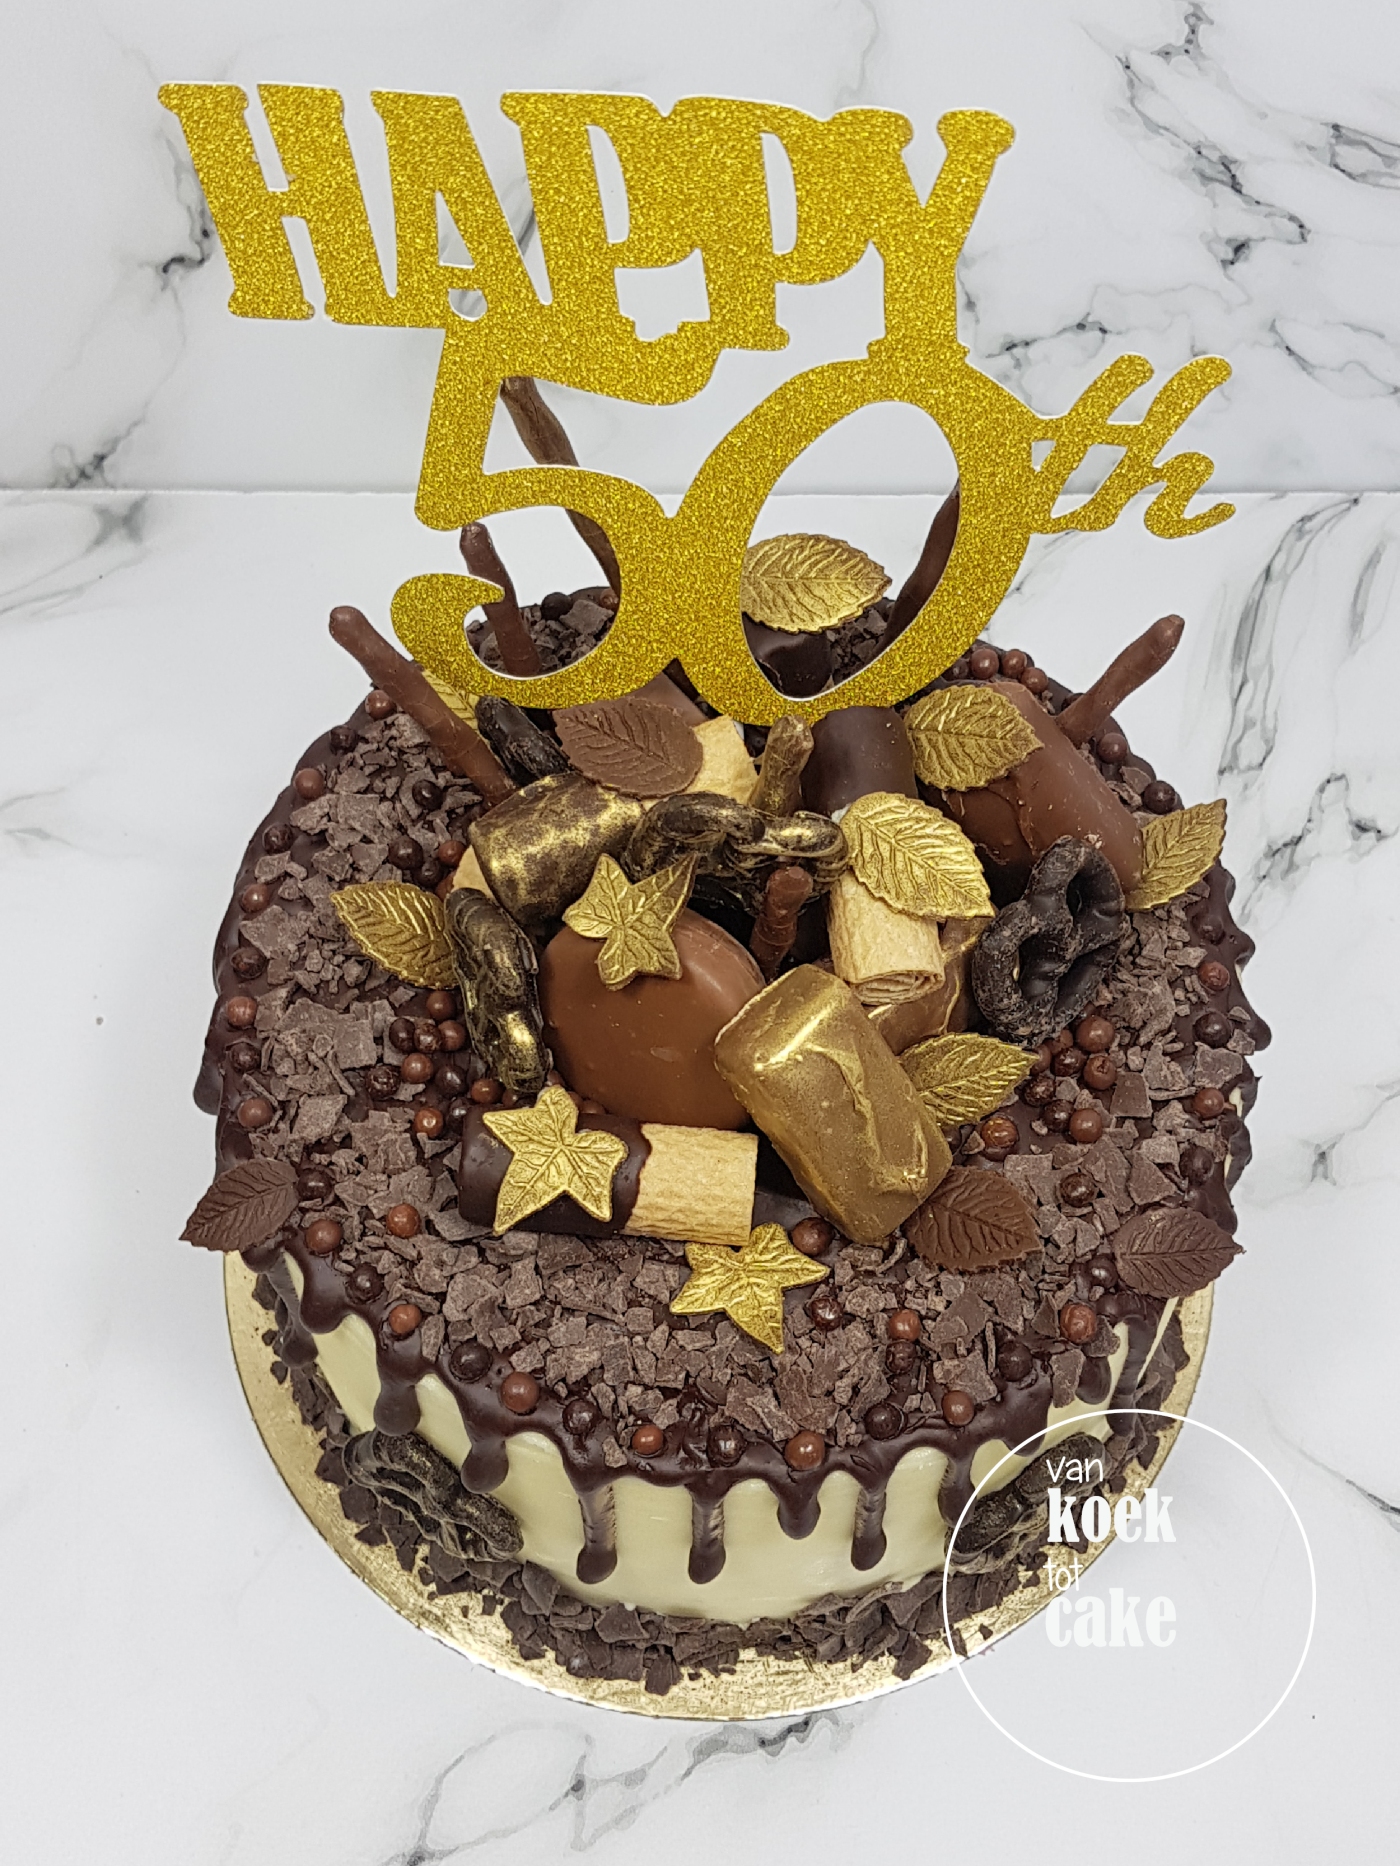 verraad handleiding leeg TAART | Happy 50th birthday – van koek tot cake